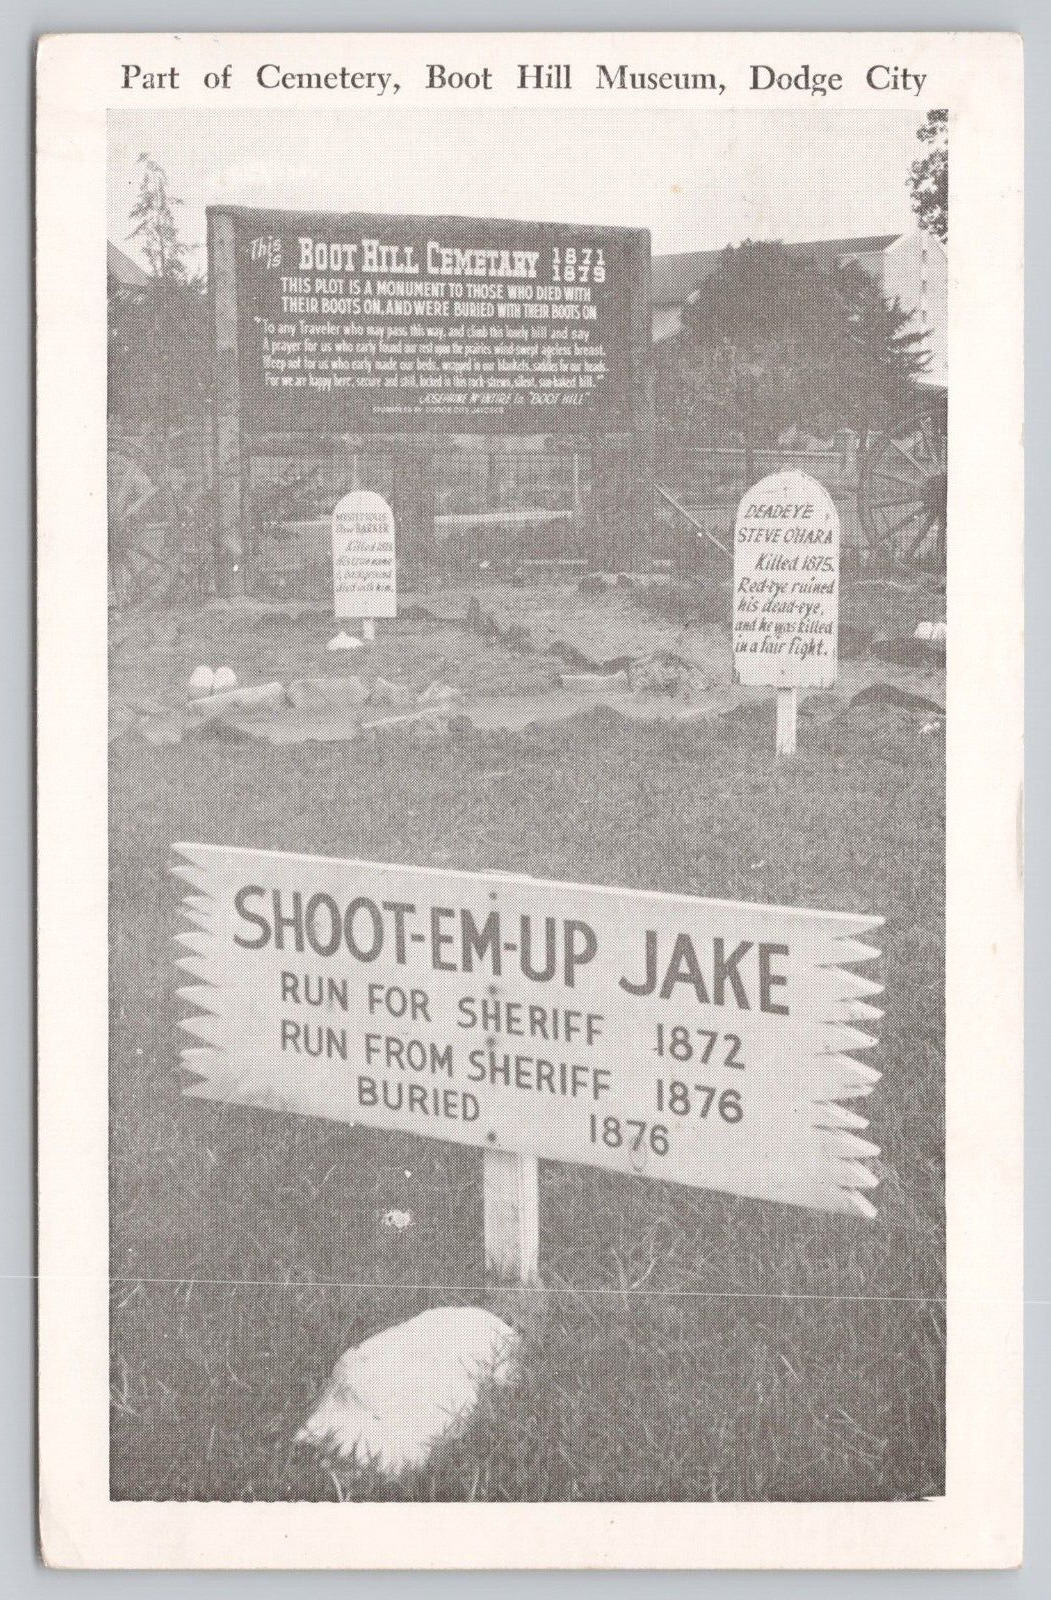 Boot Hill Cemetery Museum Dodge City Kansas KS Vintage Lithograph Postcard